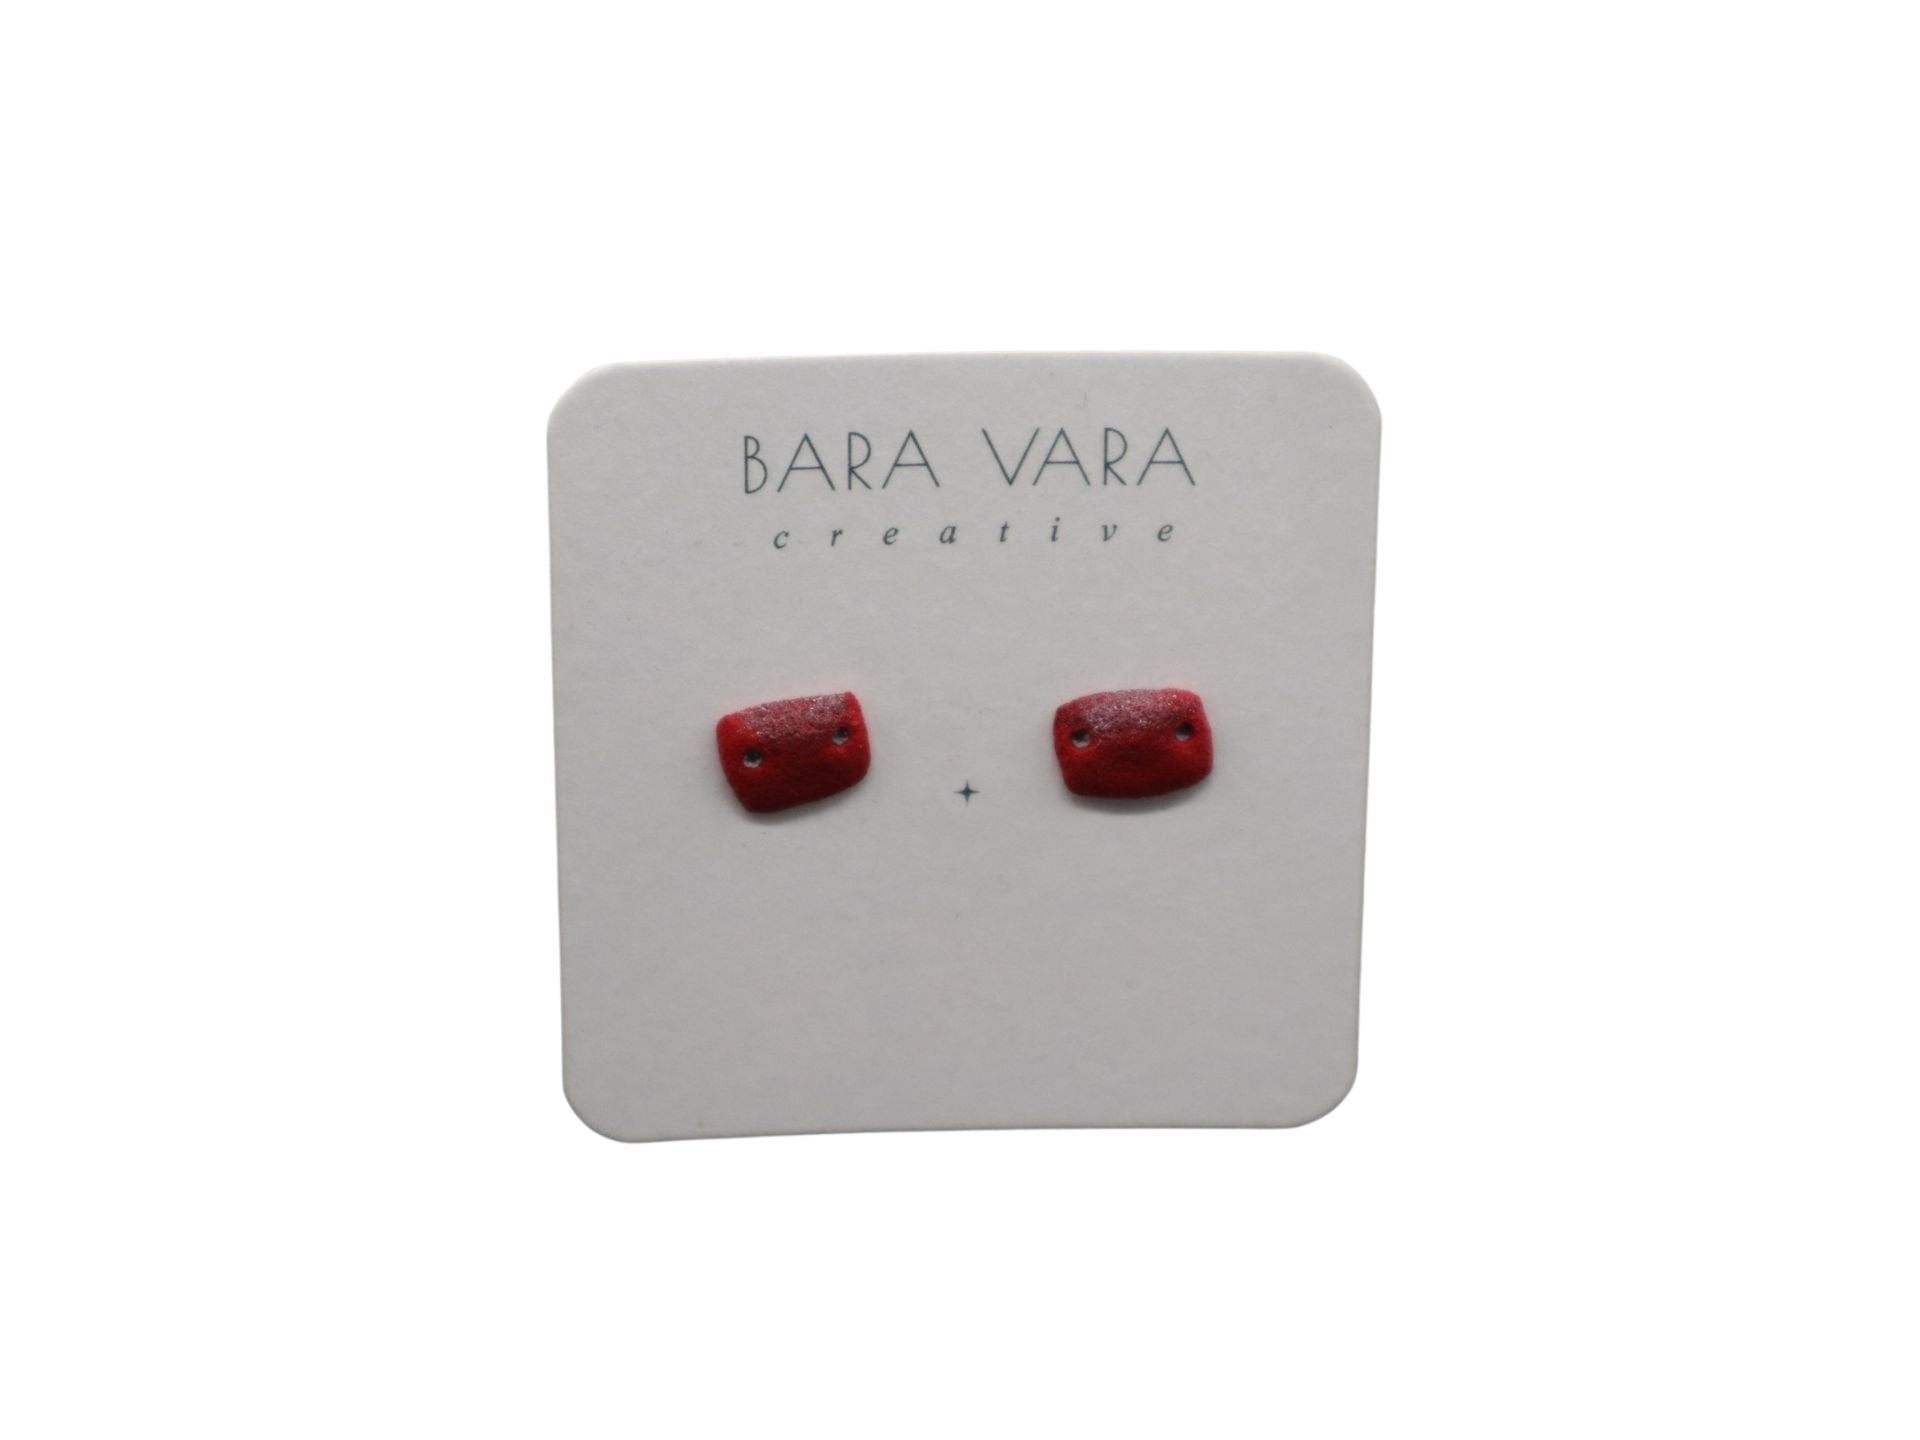 Bara Vara Creative Earrings - Red Crimp - Happy Biner